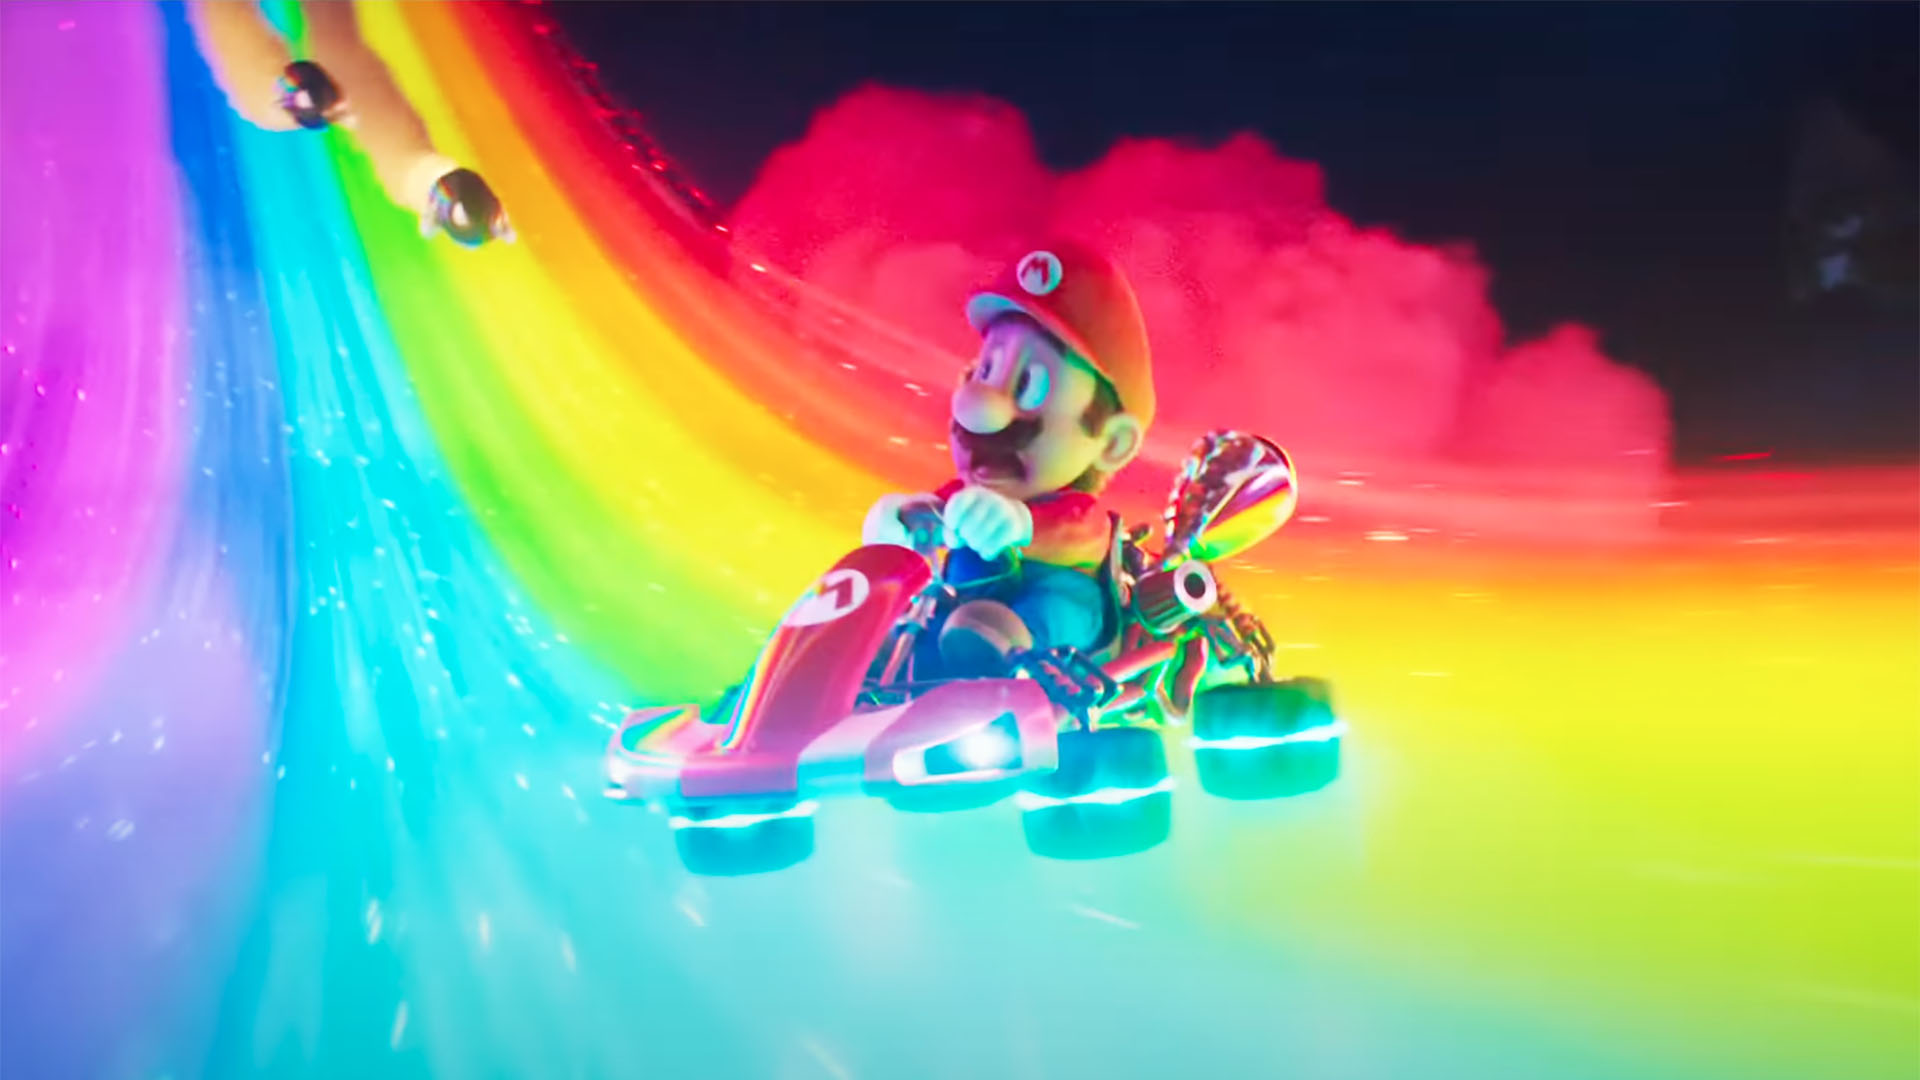 Super Mario Bros animated movie first trailer: Watch